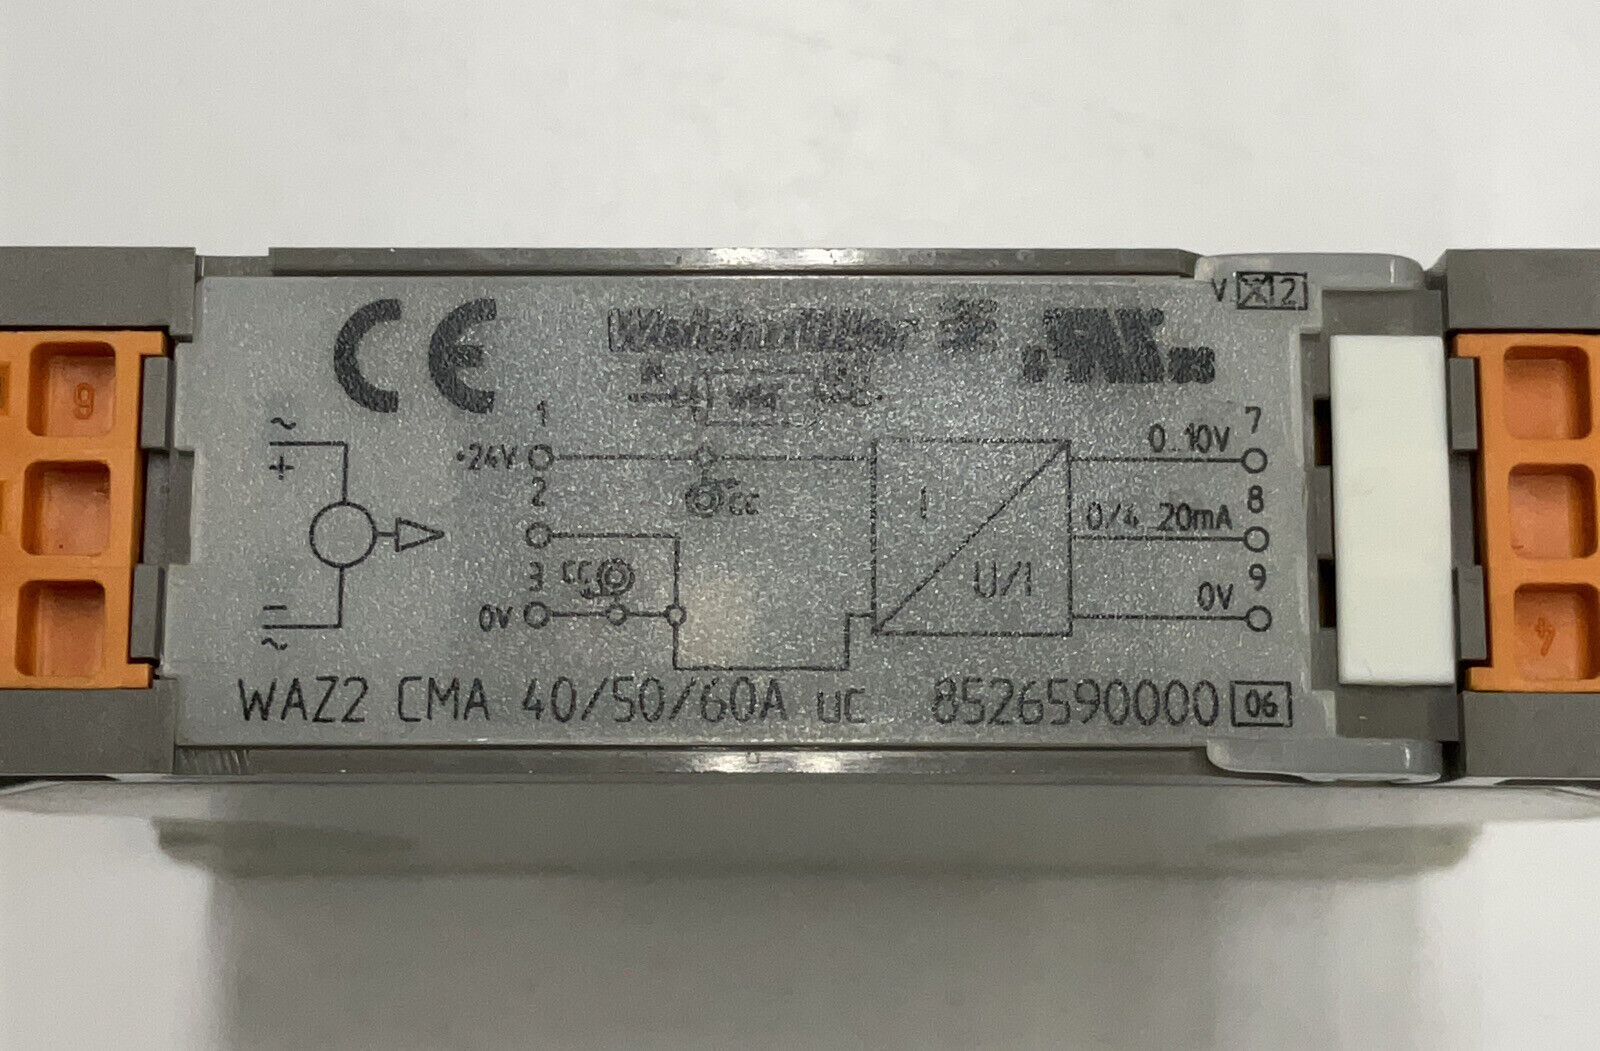 Weidmuller WAZ2 CMA 40/50/60A  8526590000 Signal Conditioner (BL245)